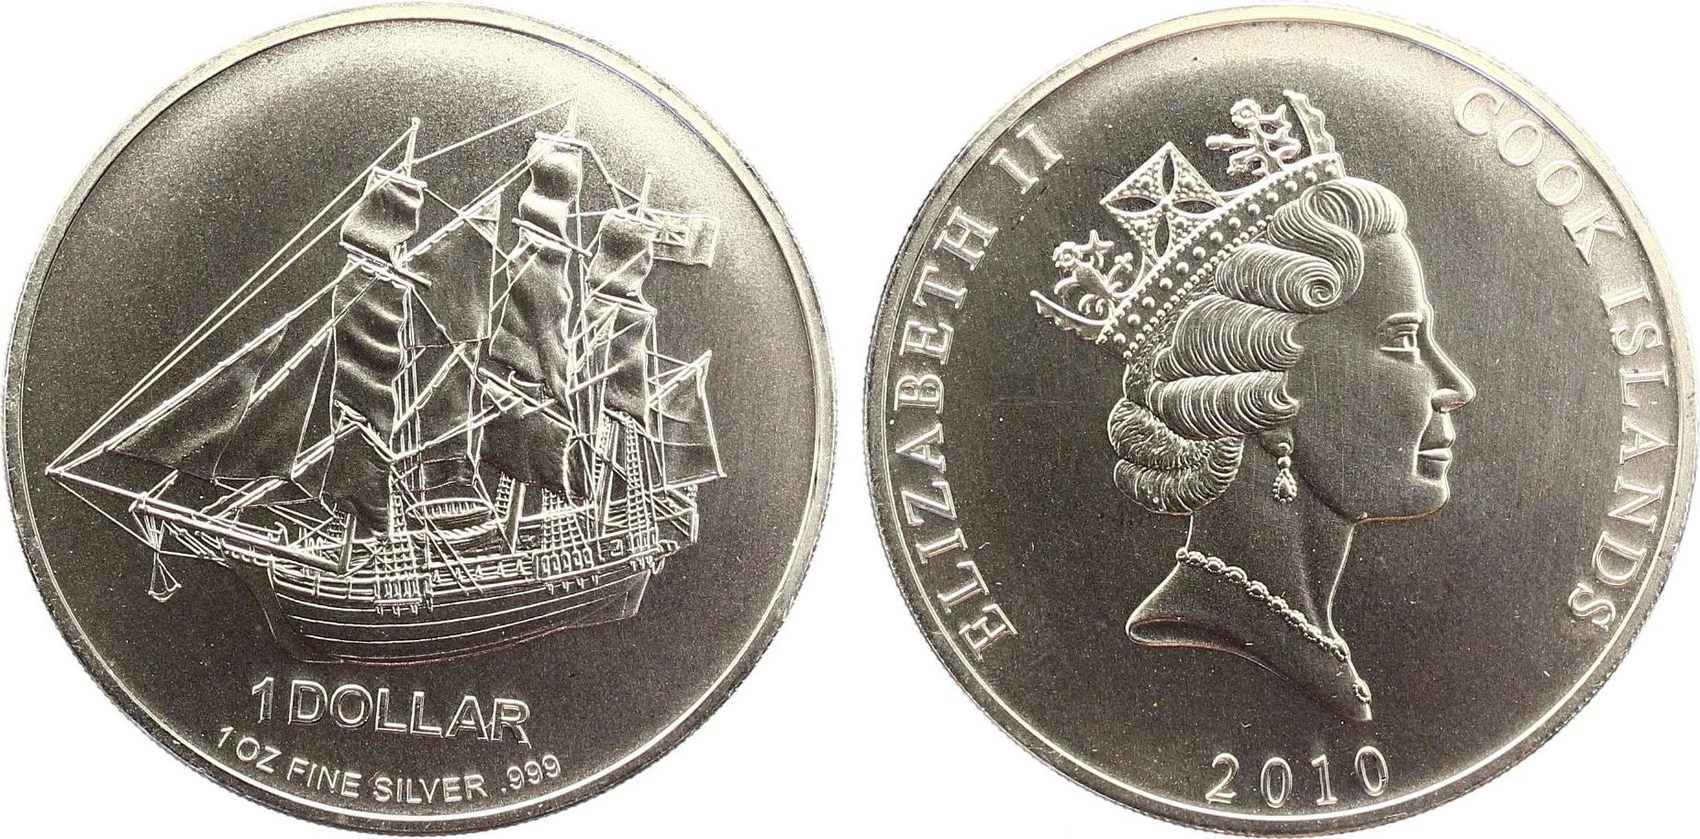 1 доллар кука. 1 Доллар острова Кука. Острова Кука 1 доллар, 2010 HMS Bounty. Cook Islands монета. Острова Кука 1 доллар 2010 Биметалл.